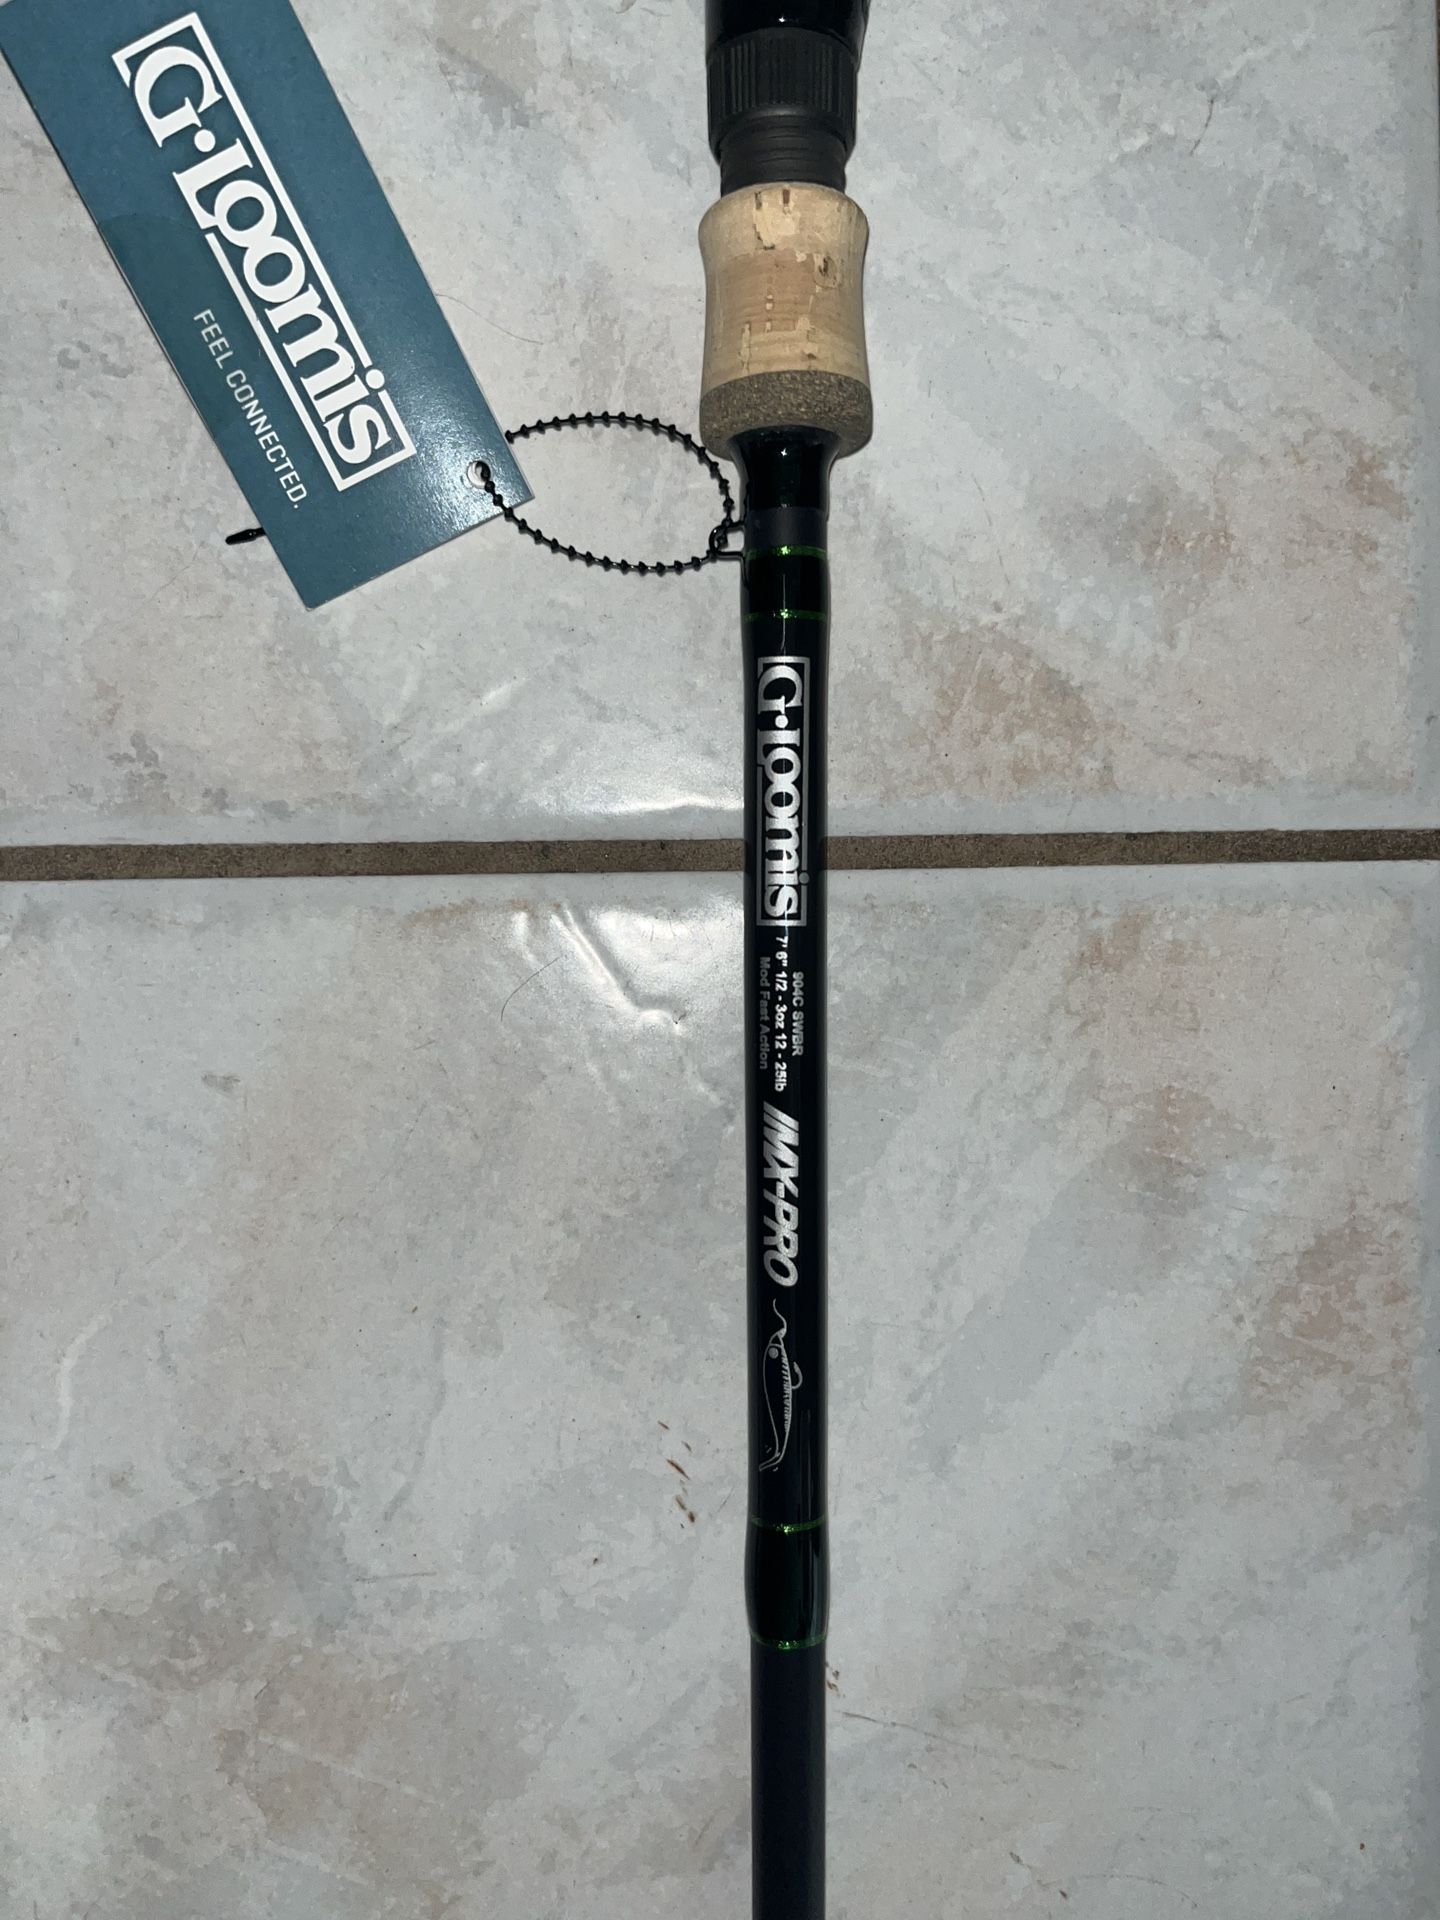 (Brand New) G- Loomis IMX Pro Casting Fishing Rod 